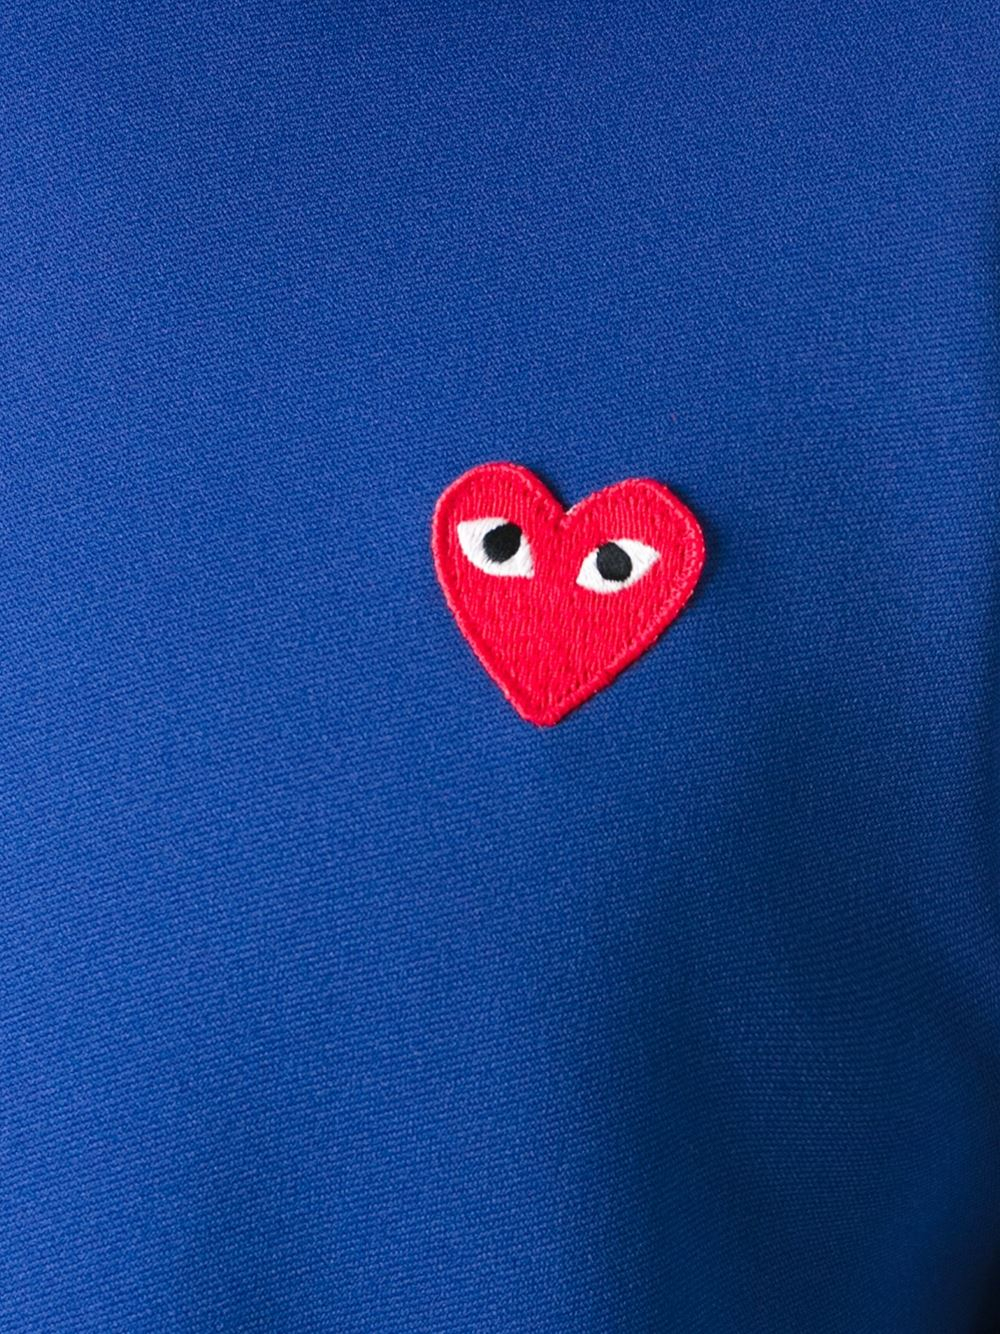 Comme des Garçons Heart Logo Hoodie in Blue for Men - Lyst